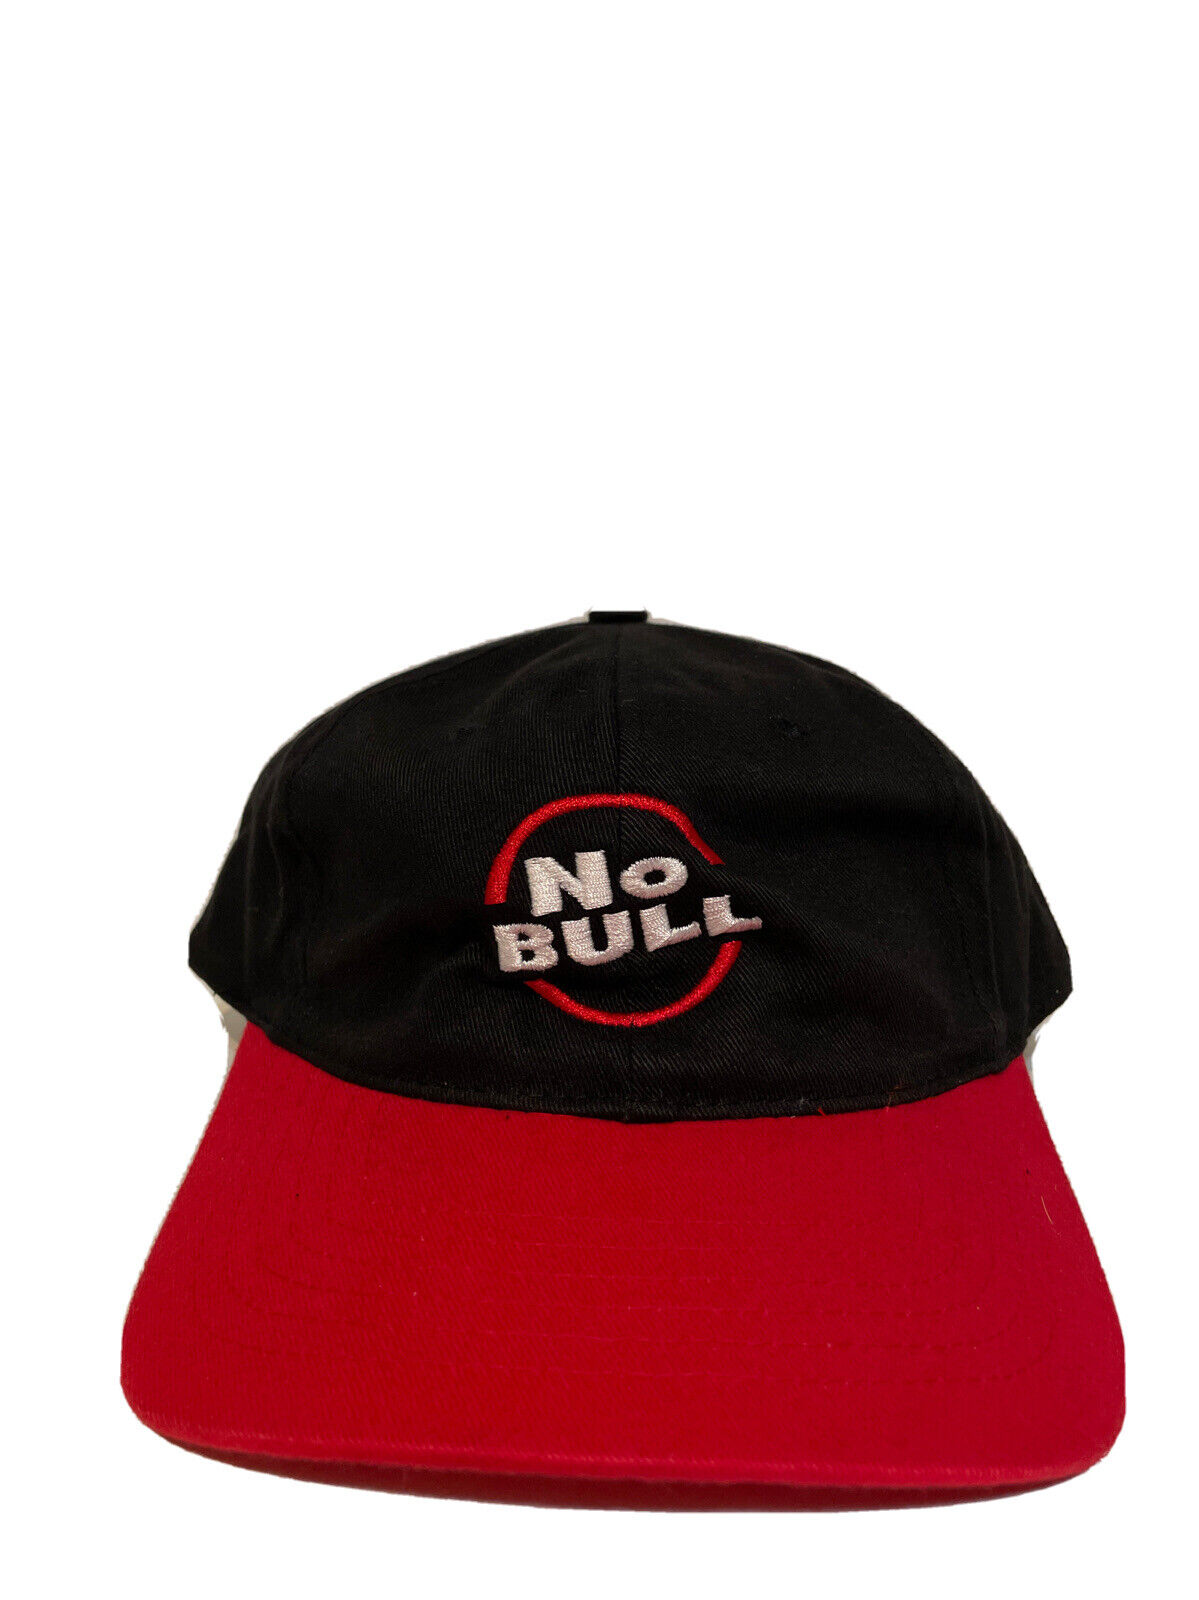 Vintage No Bull Hat NASCAR Winston Cup No Bull Adjustable Black